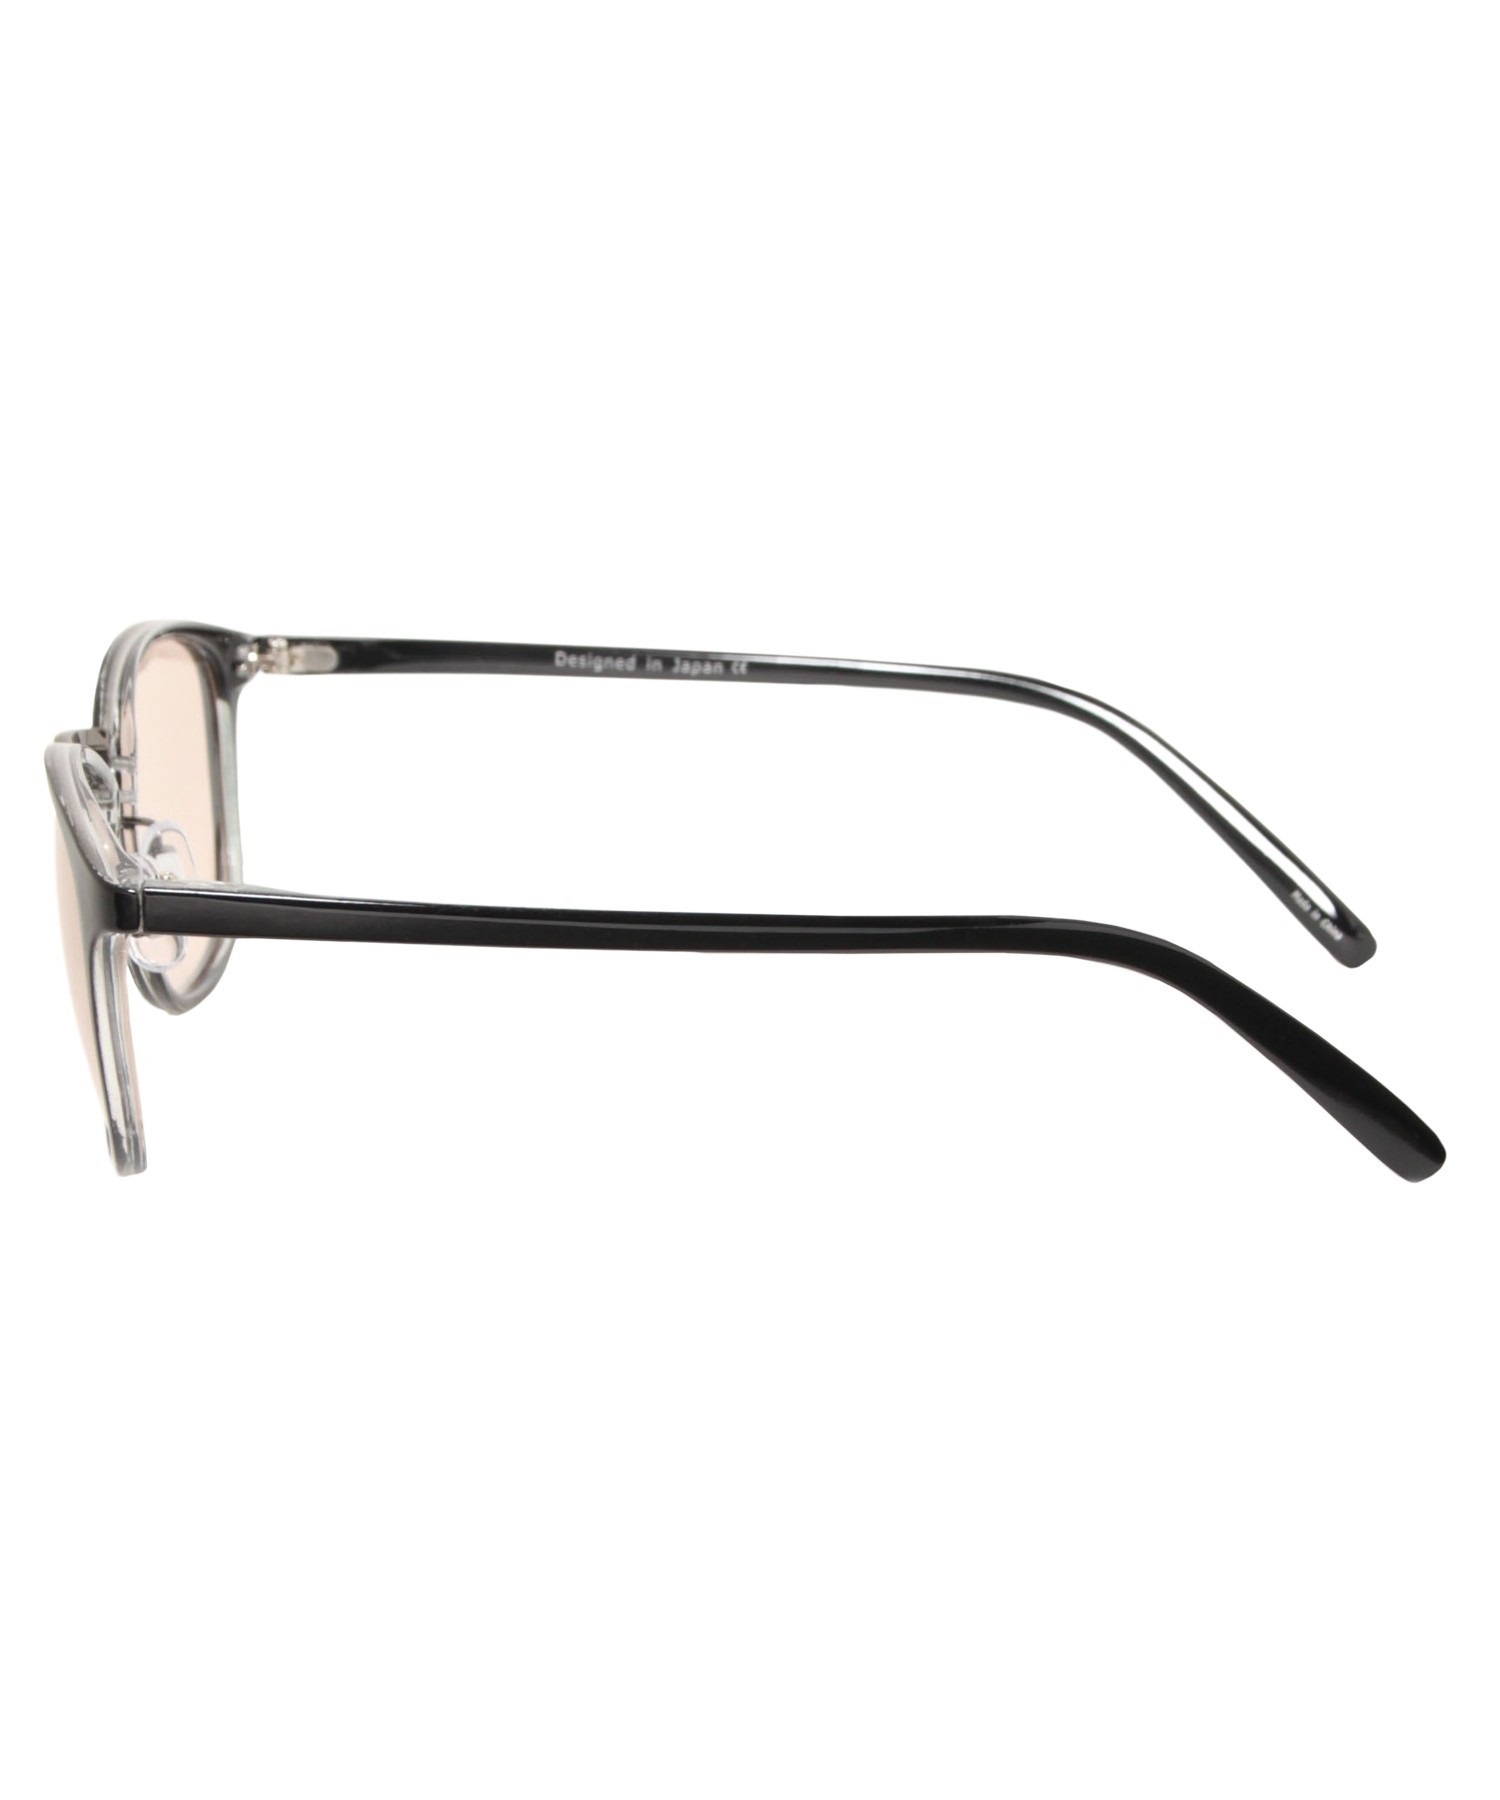 G-PRIDE ジープライド GP1037 メンズ 眼鏡 メガネ サングラス KK E18(BKBR-F)